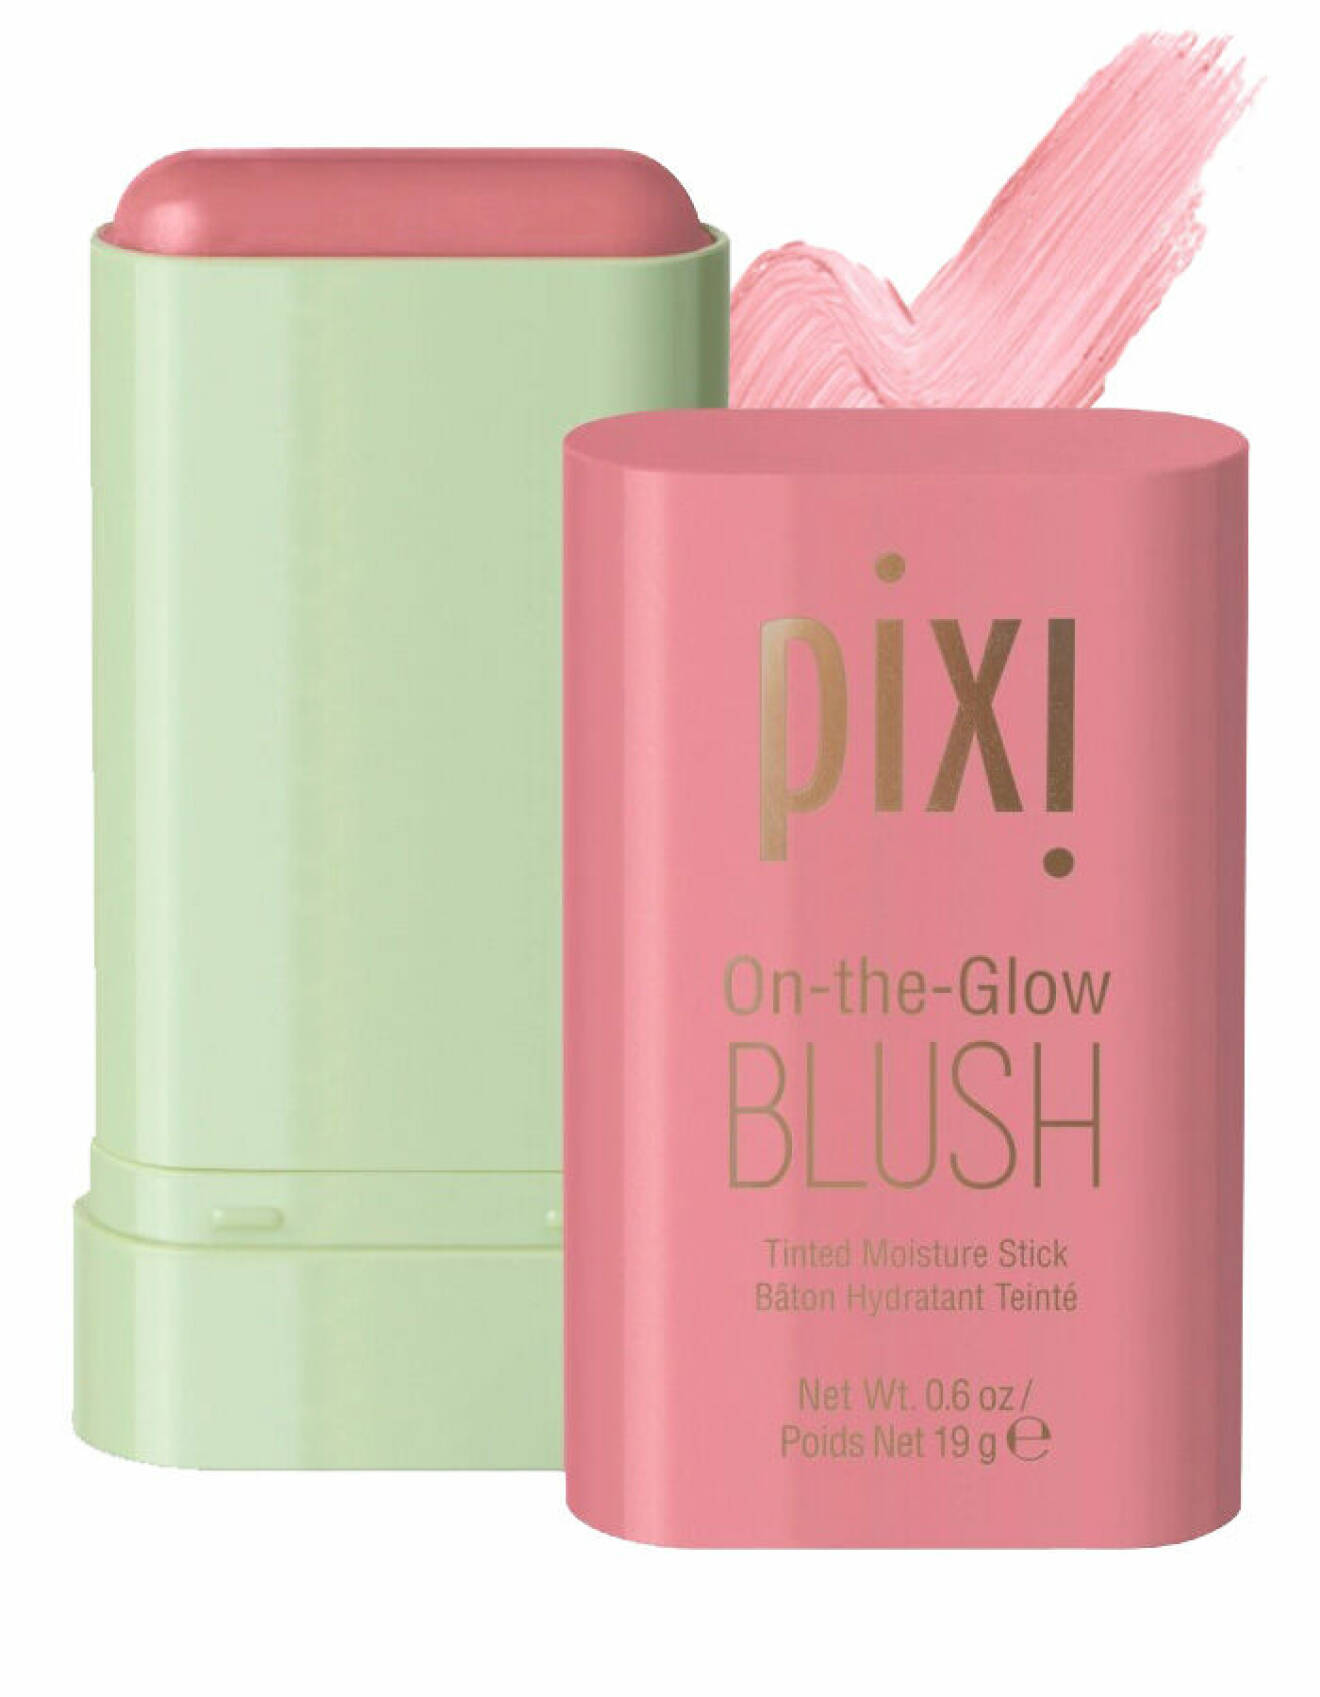 On-the-Glow Blush från Pixi